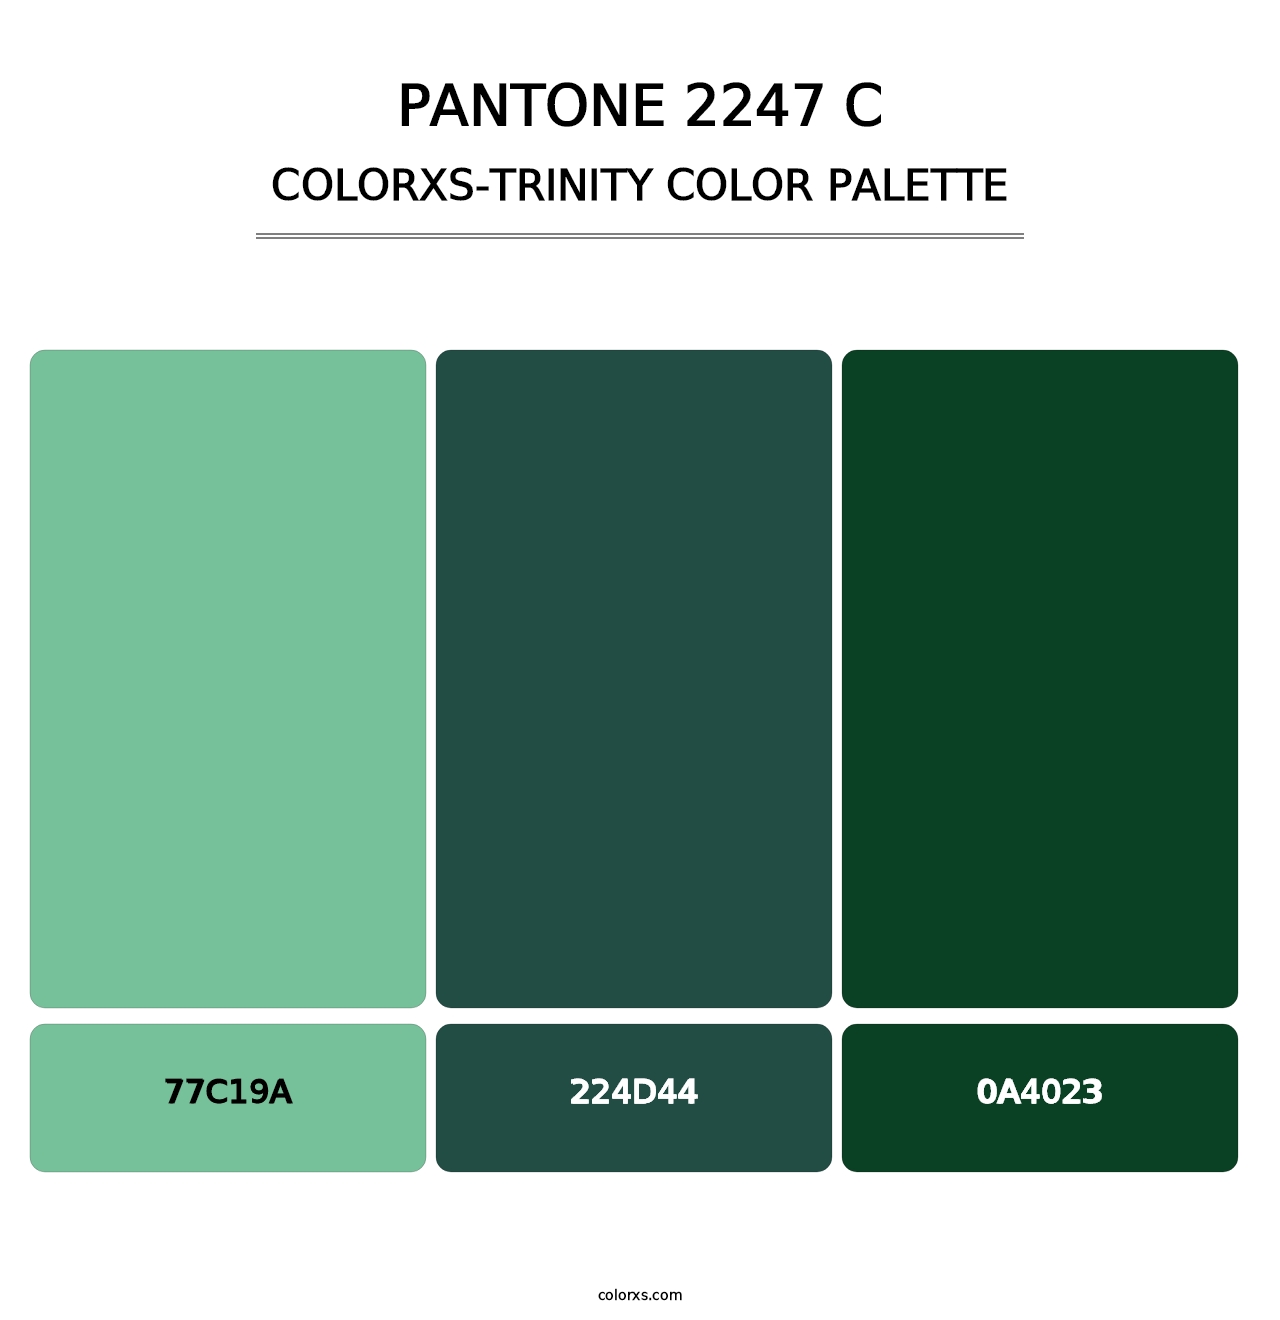 PANTONE 2247 C - Colorxs Trinity Palette